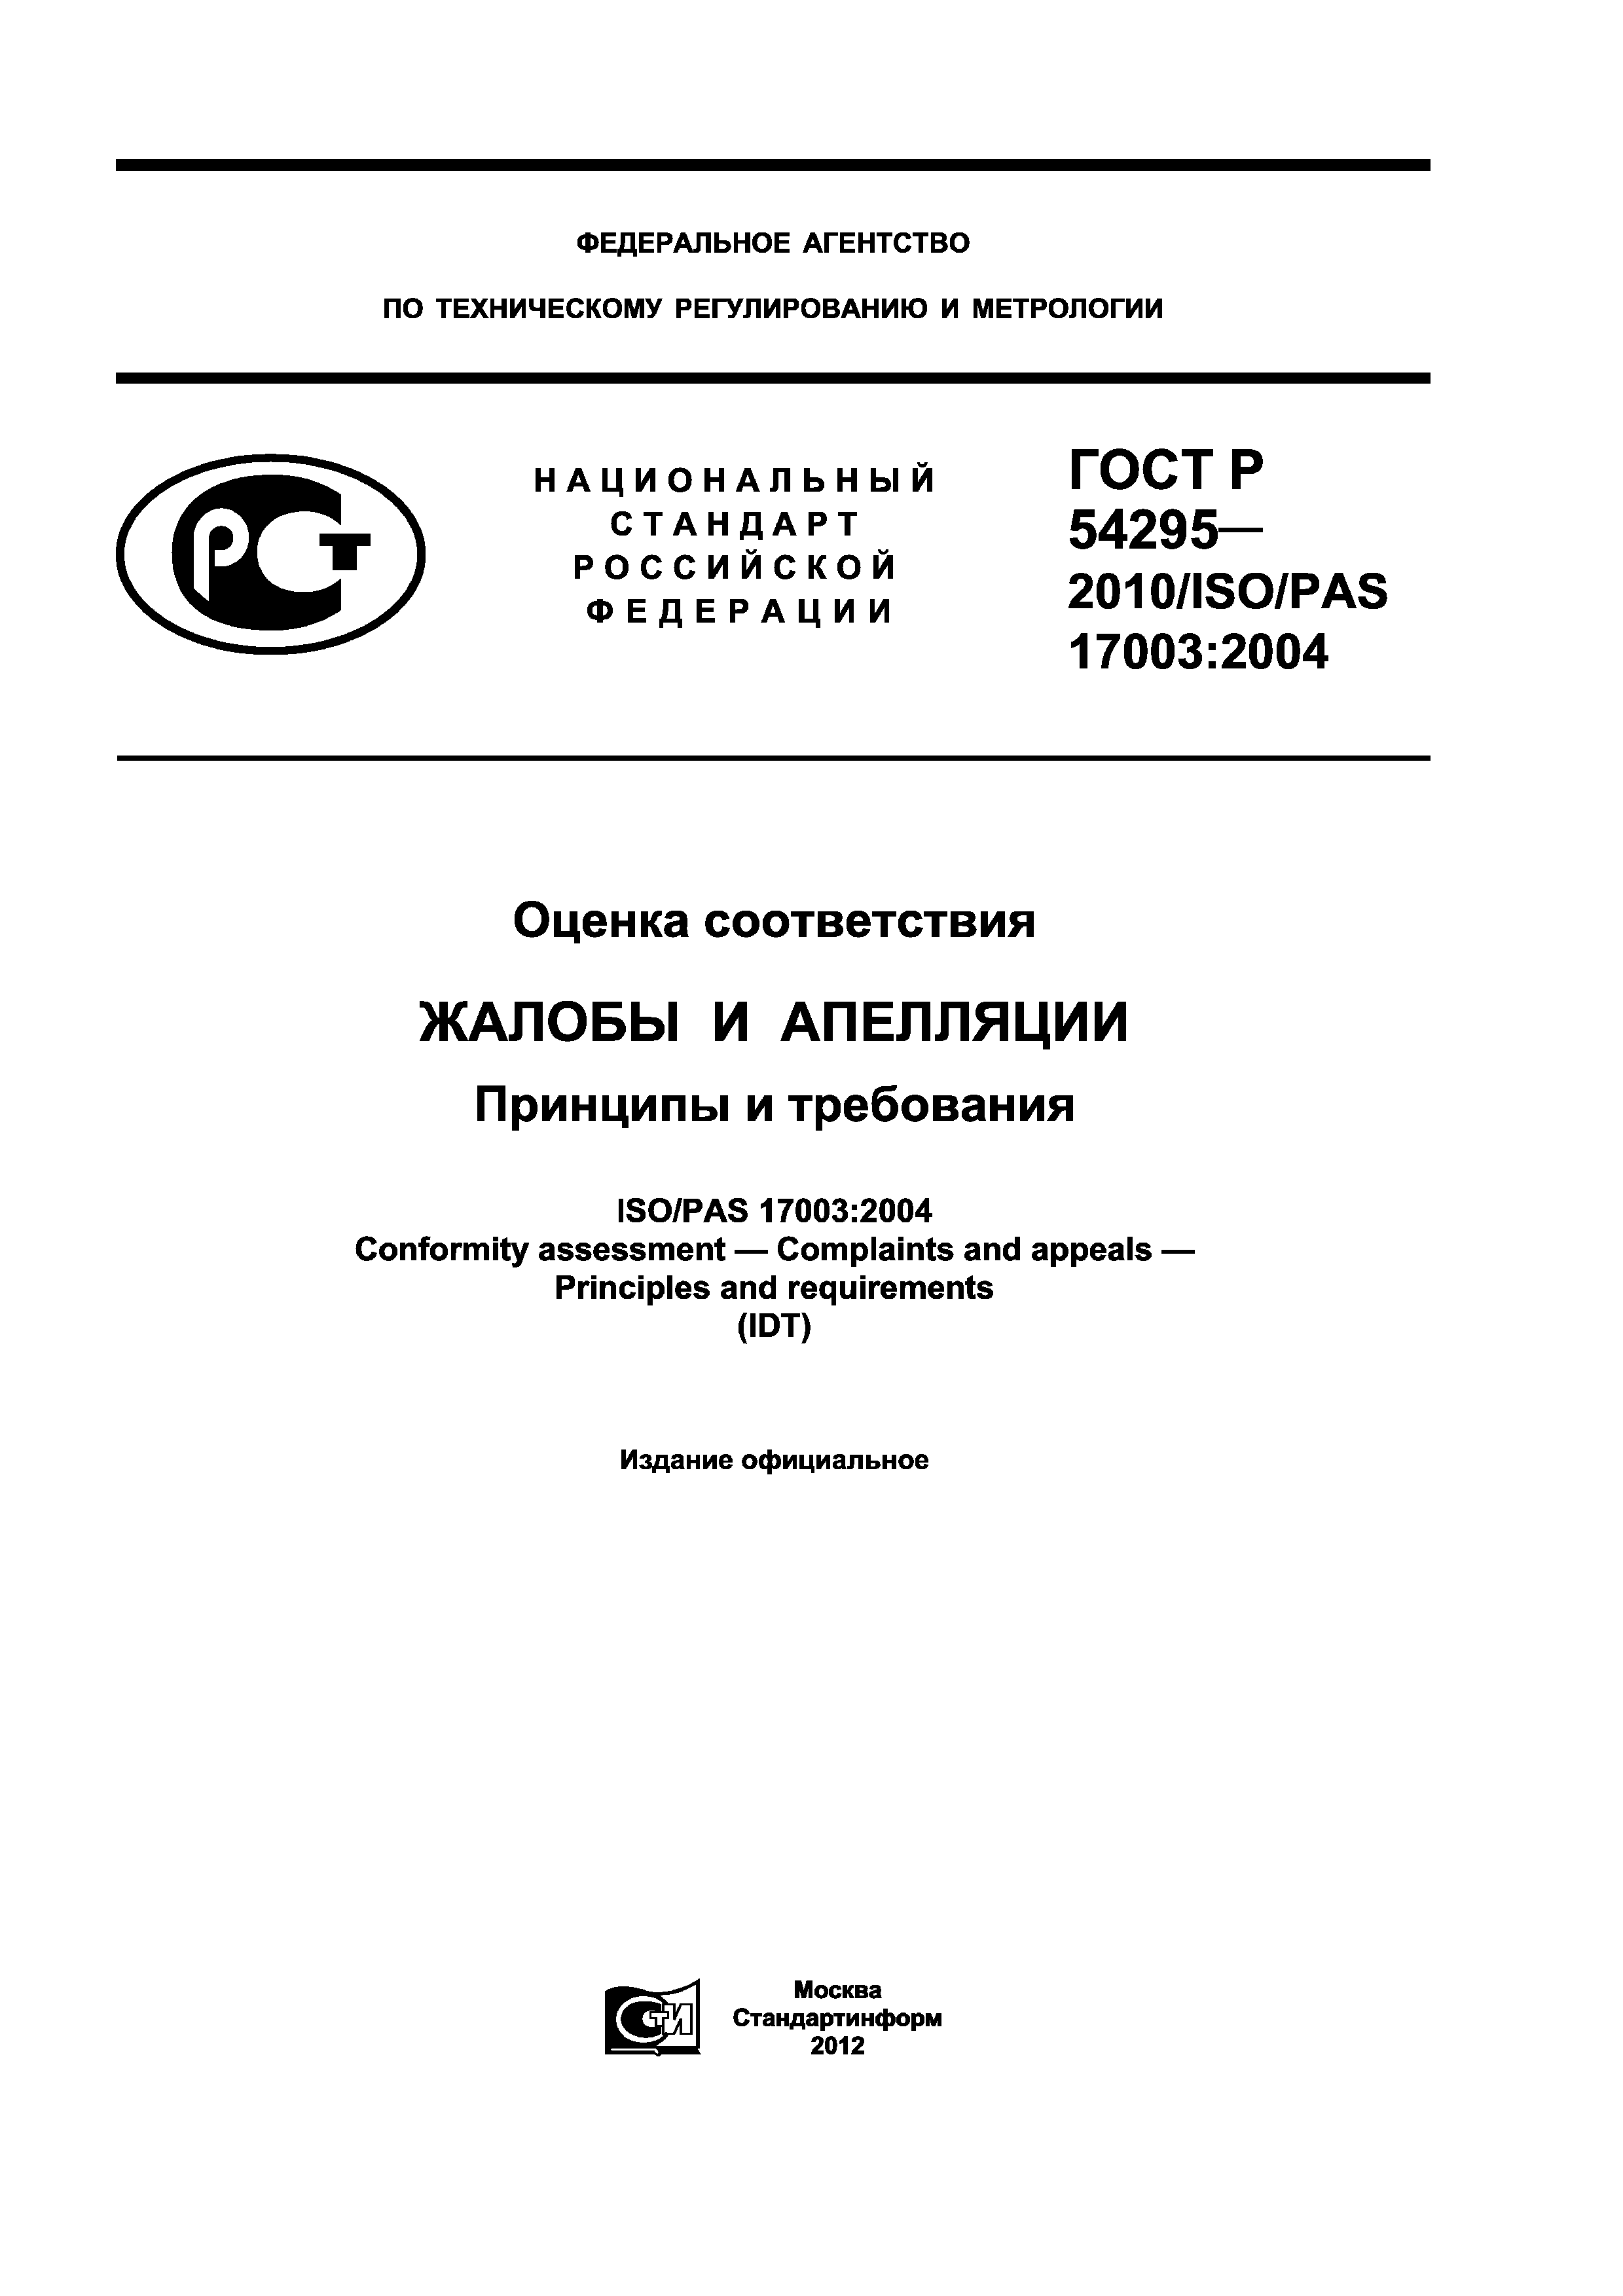 ГОСТ Р 54295-2010